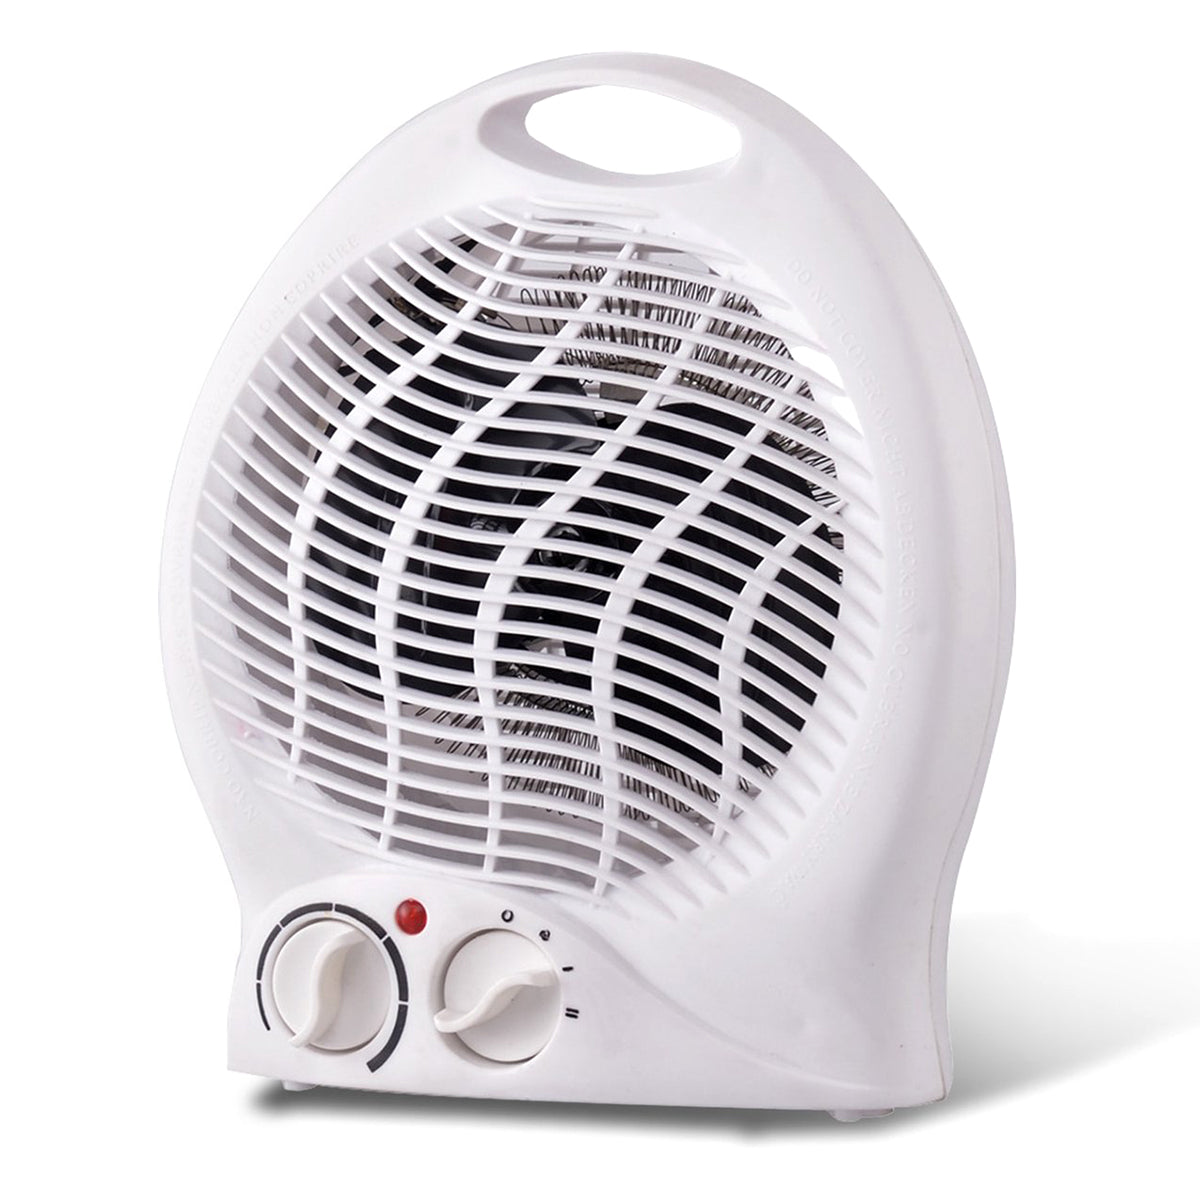 <tc>Ariko</tc> Elta electric heater - Heating - Ventilation - Additional heating - 2000Watt - Very compact up to 25 m2